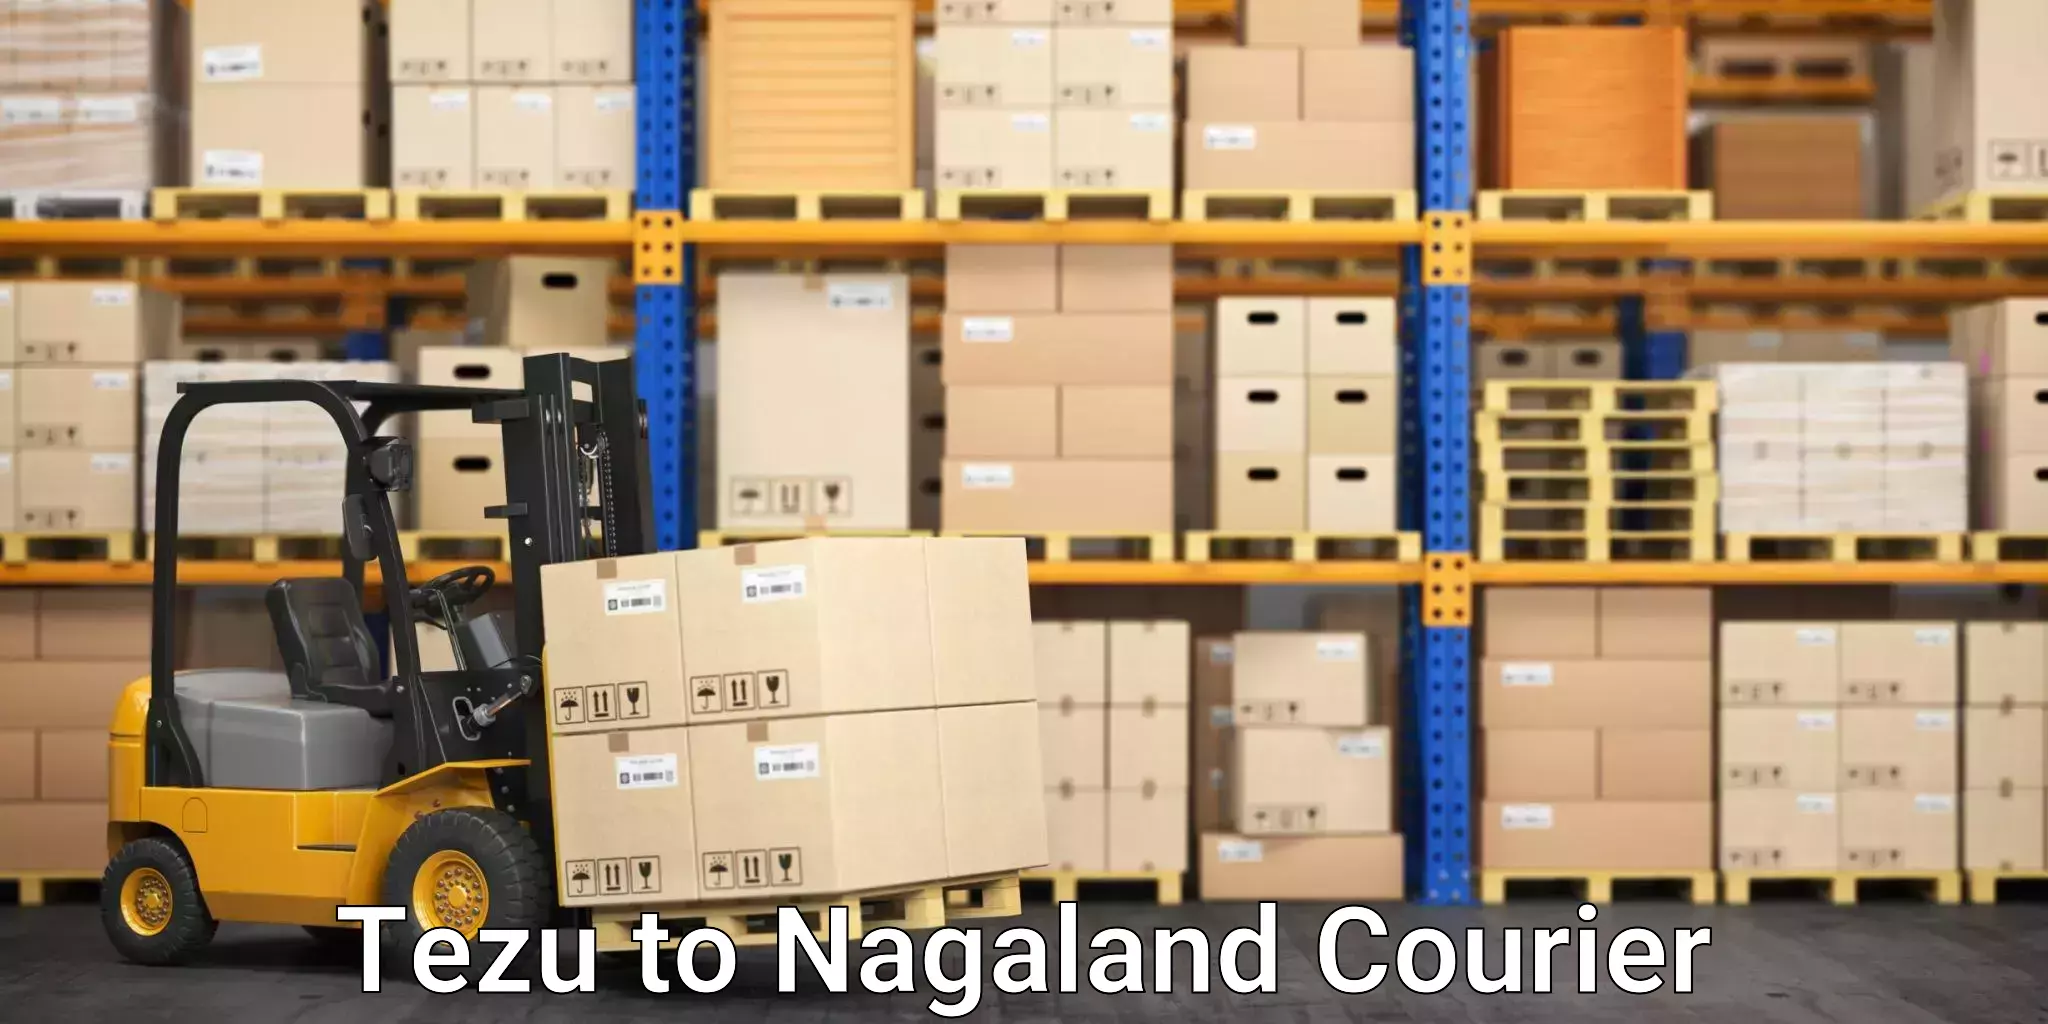 Efficient cargo handling Tezu to Nagaland